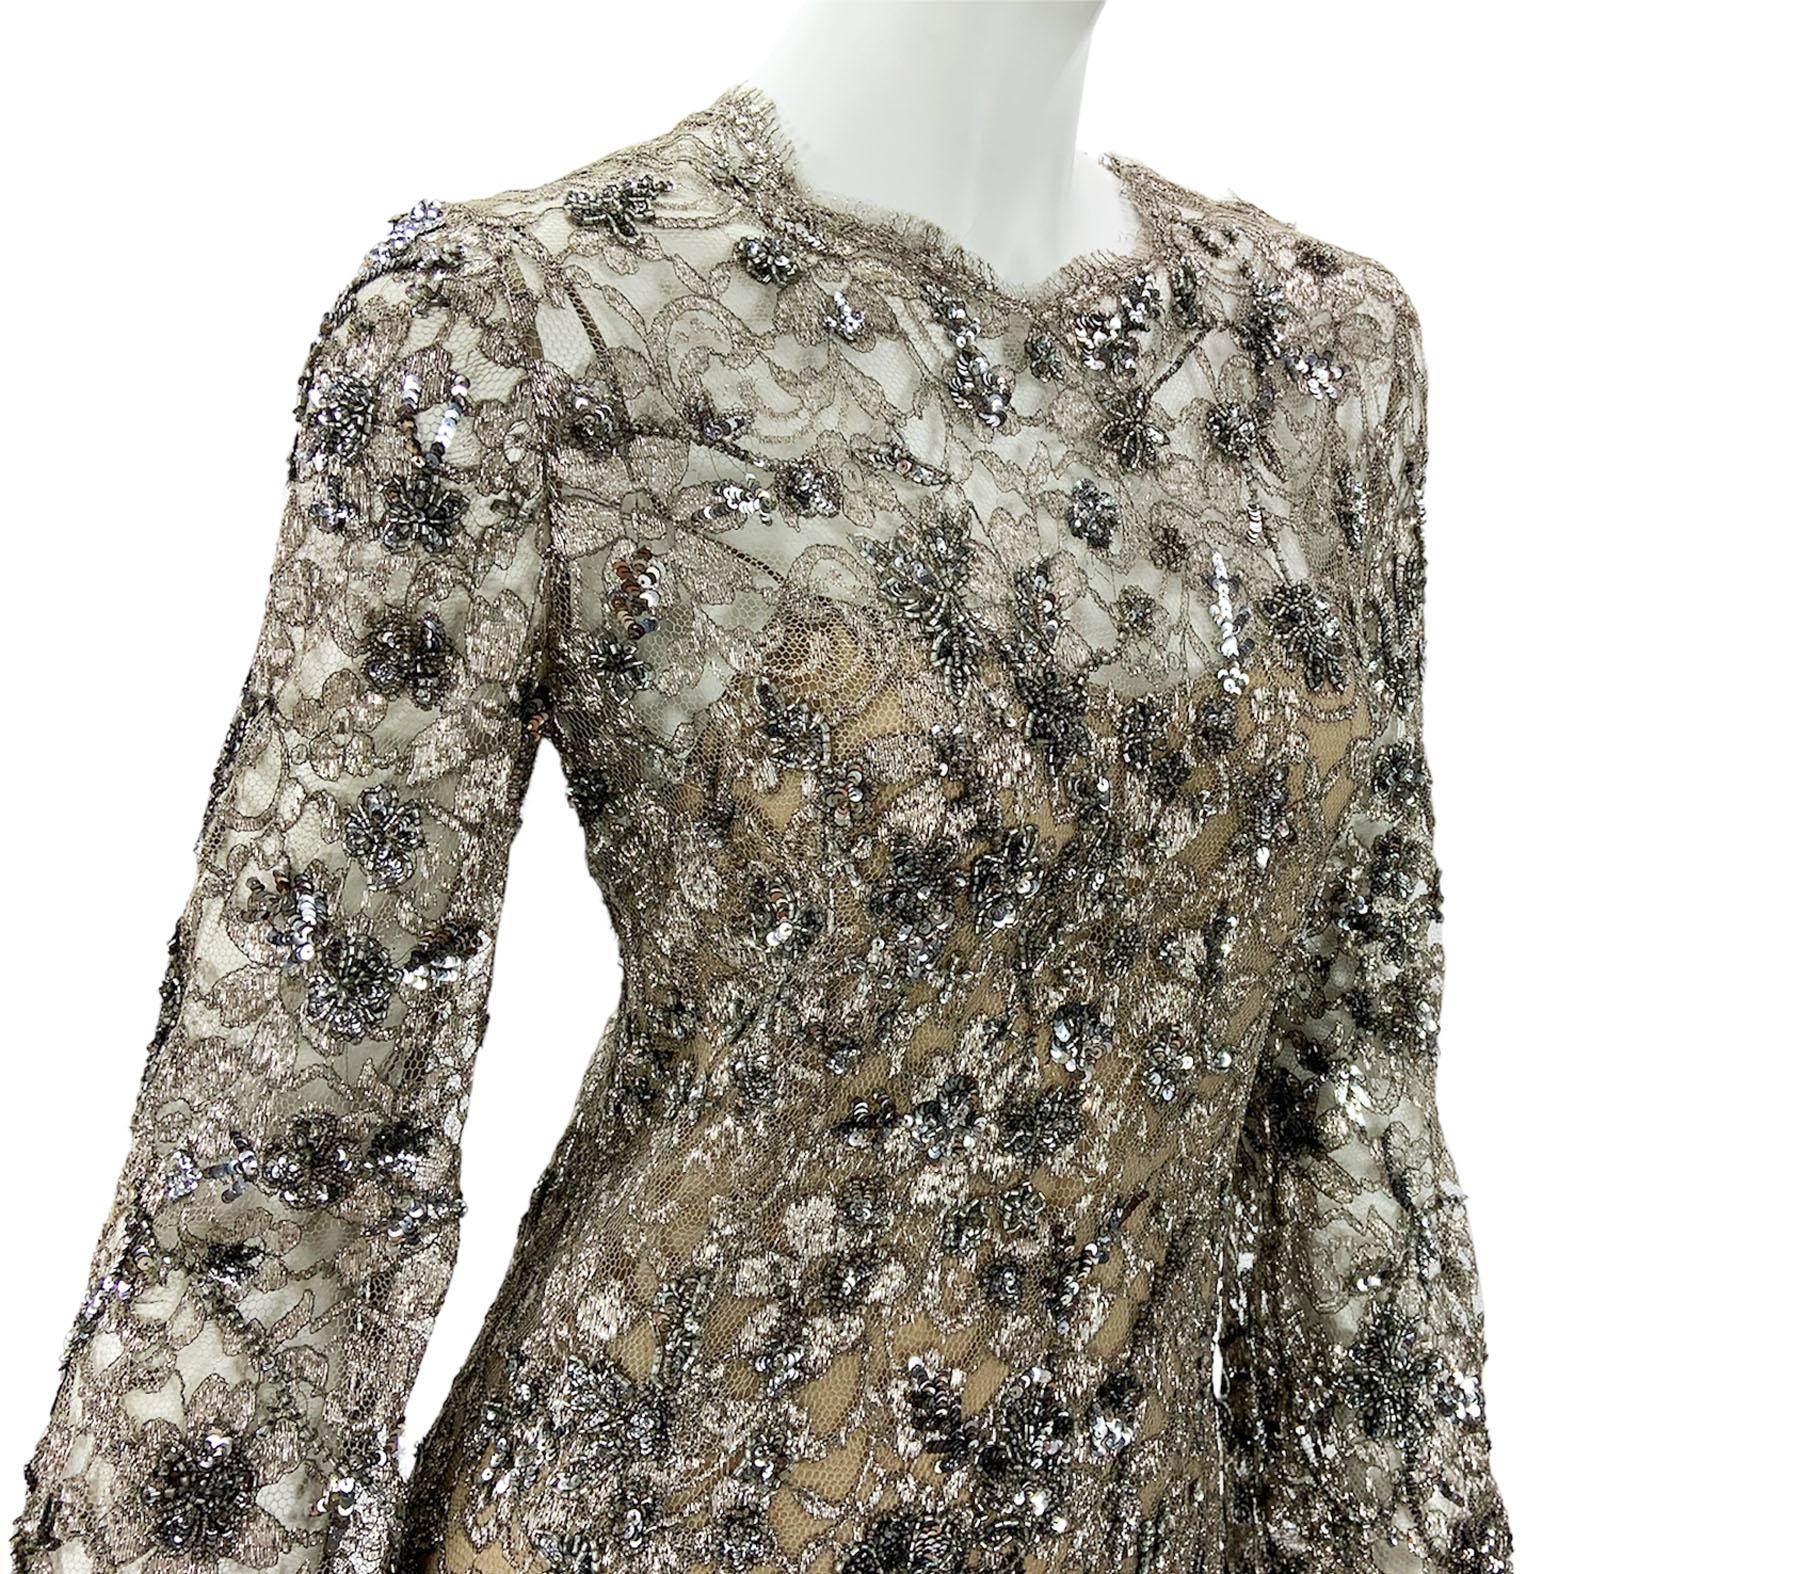 Vintage Oscar de la Renta Fully Embellished Smoky Gray Lace Dress Gown  6